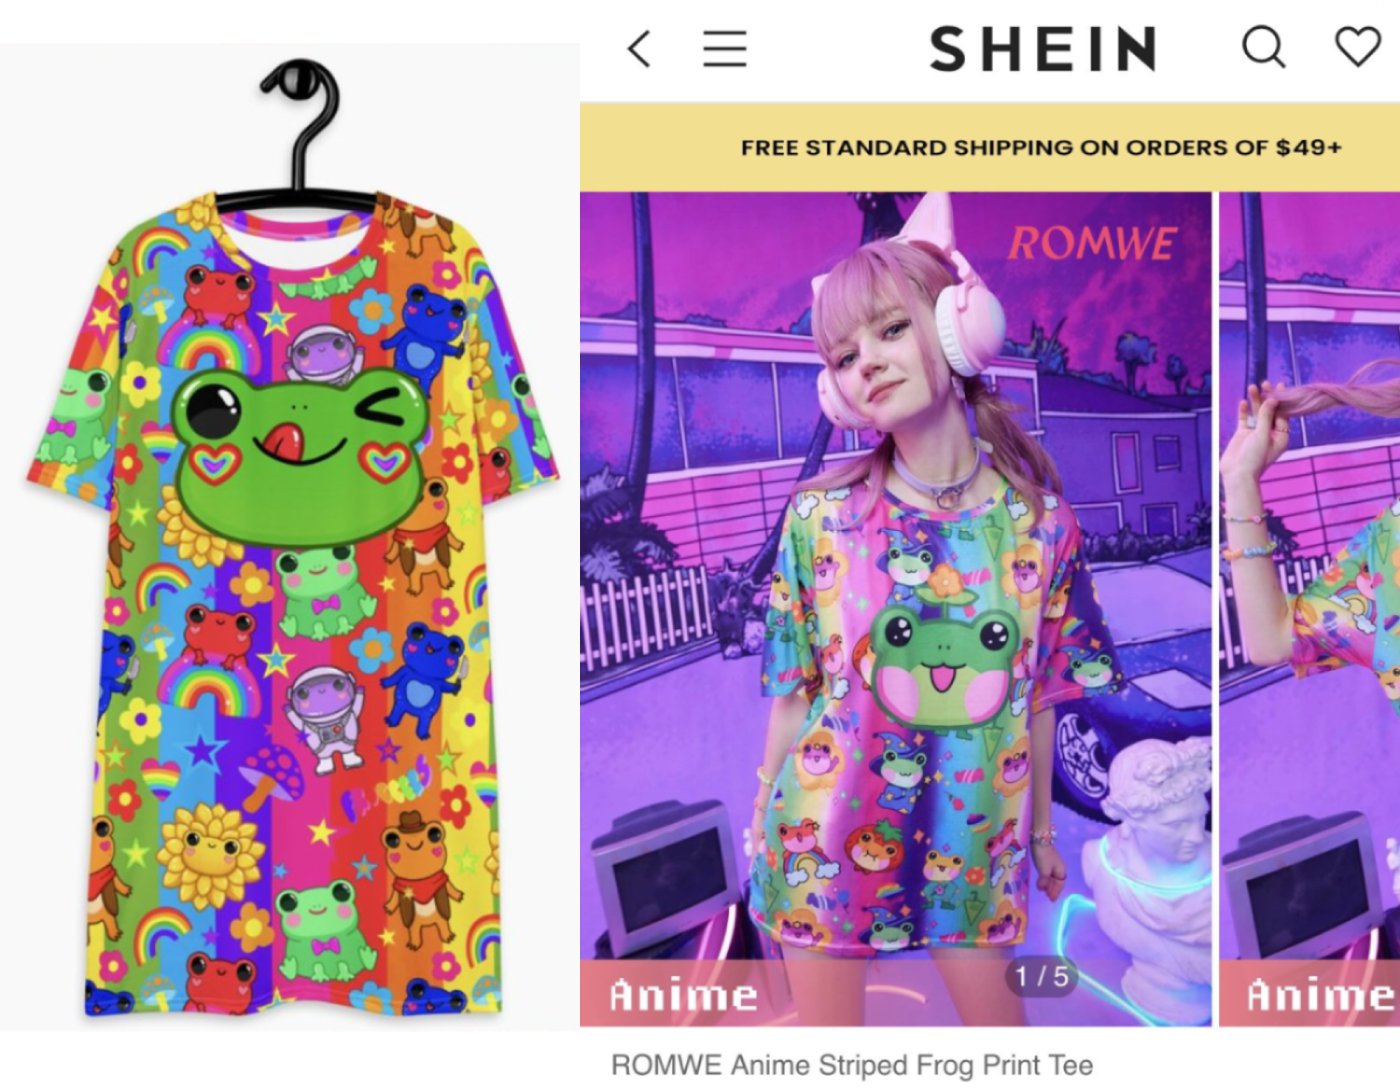 Shein Stole My Design' Says Fitness Influencer Alleging Copycat Skirt